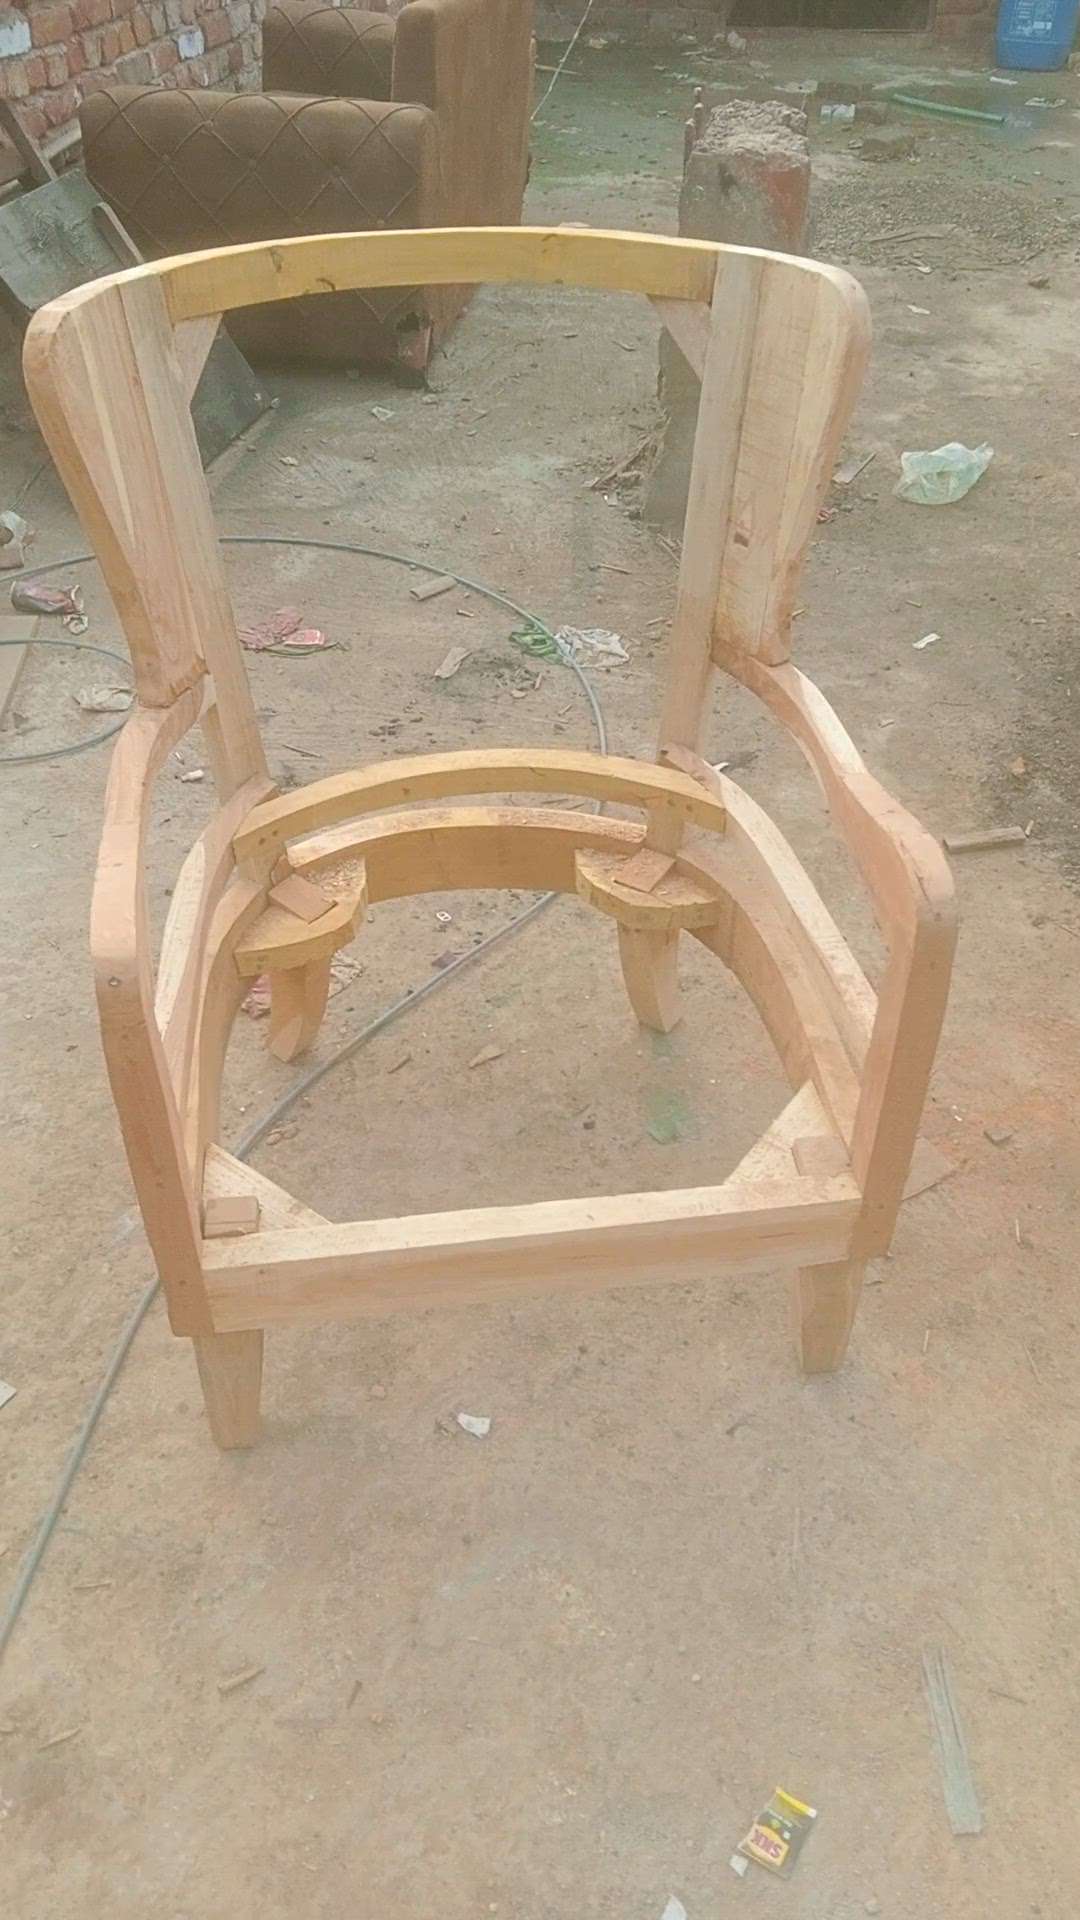 wood chair frame

call msg7303348315